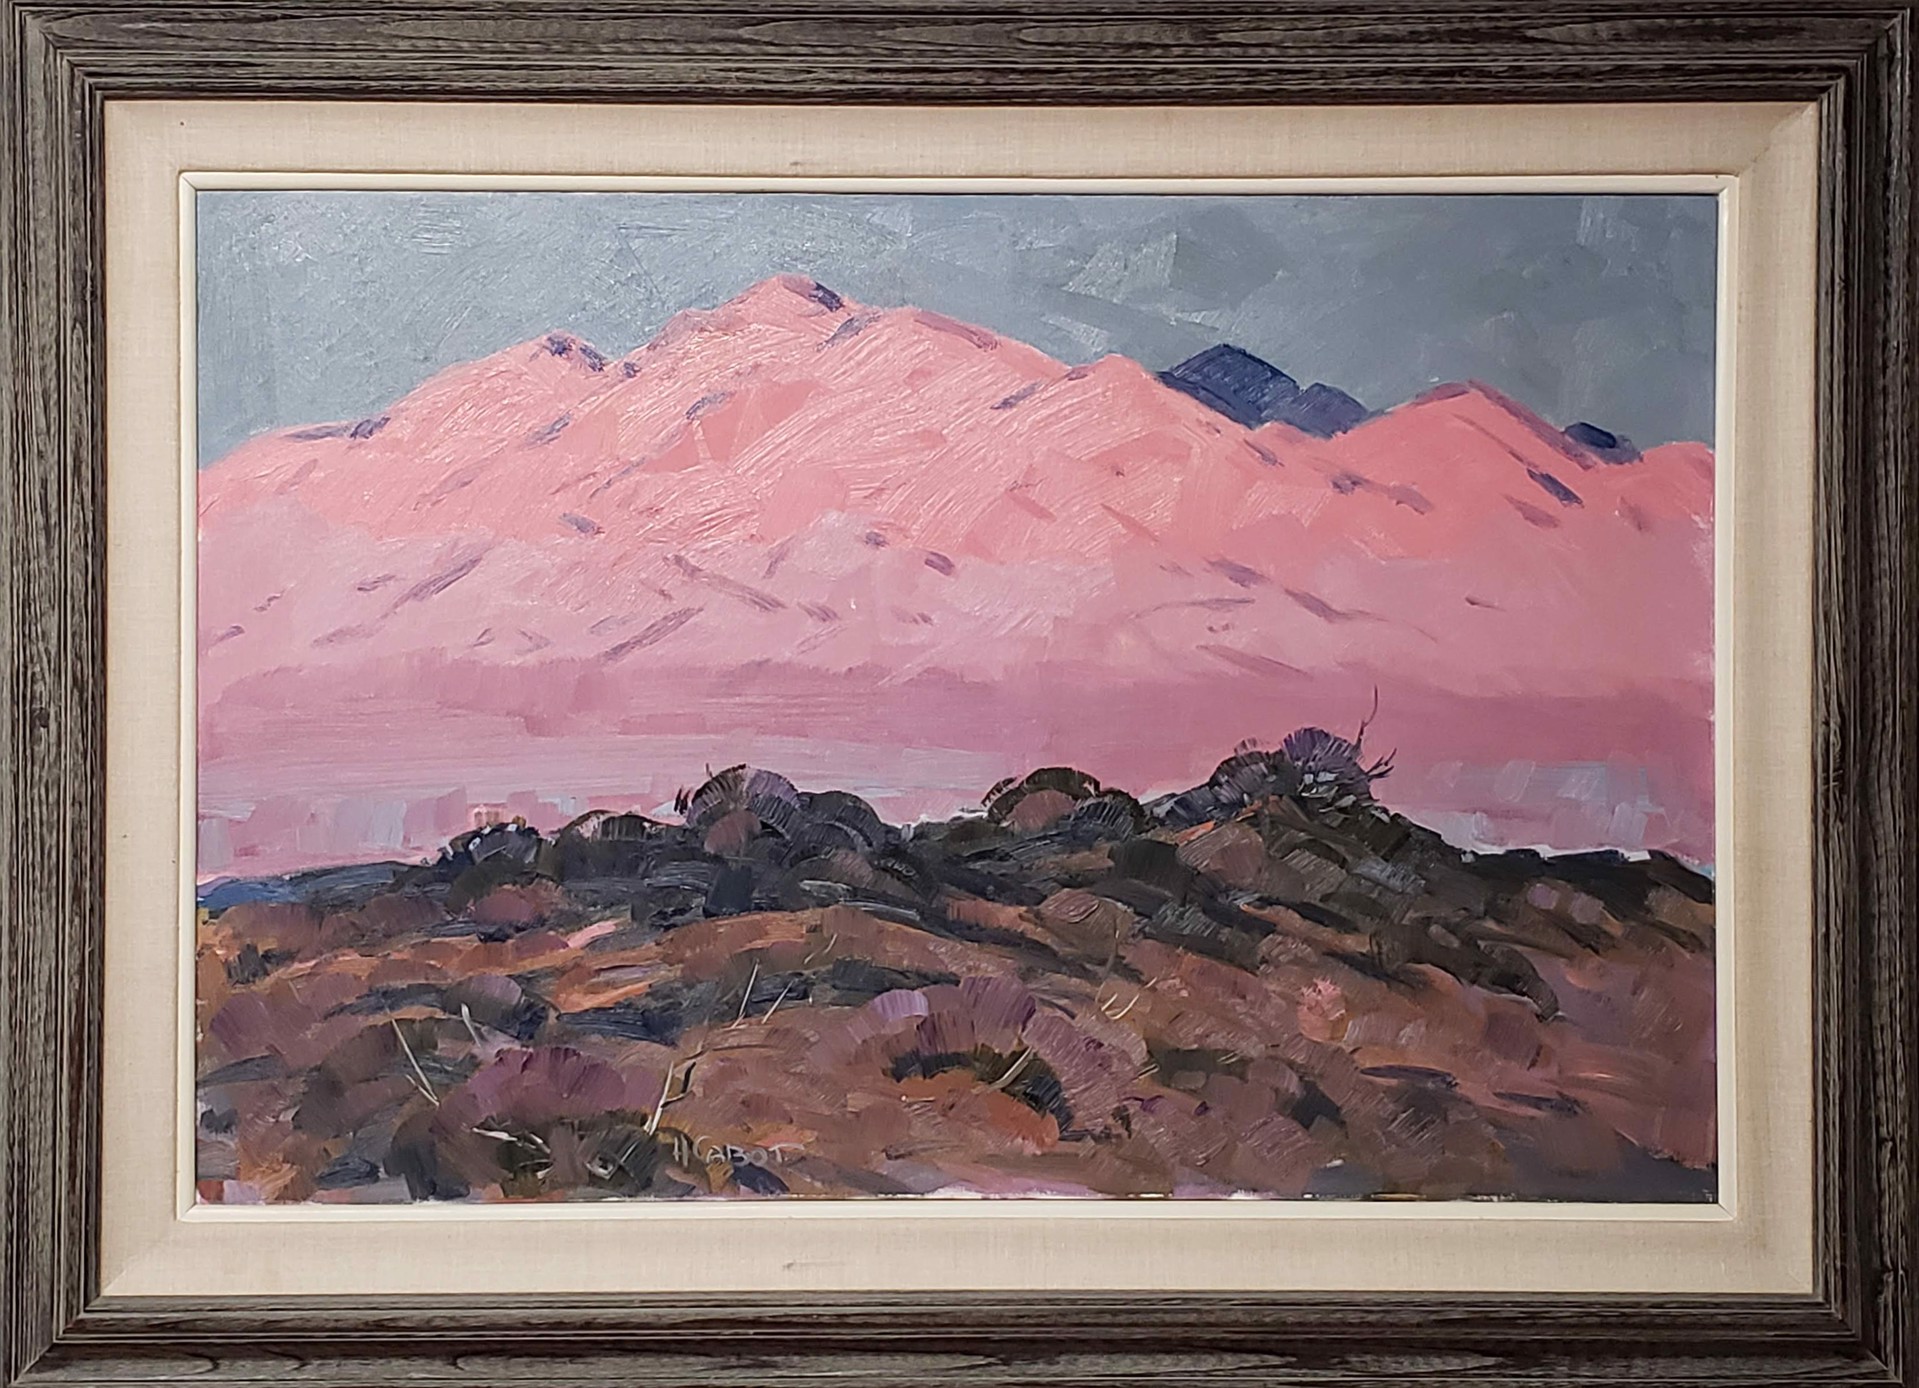 When the Mountains Get Pink by Originals Hugh Cabot